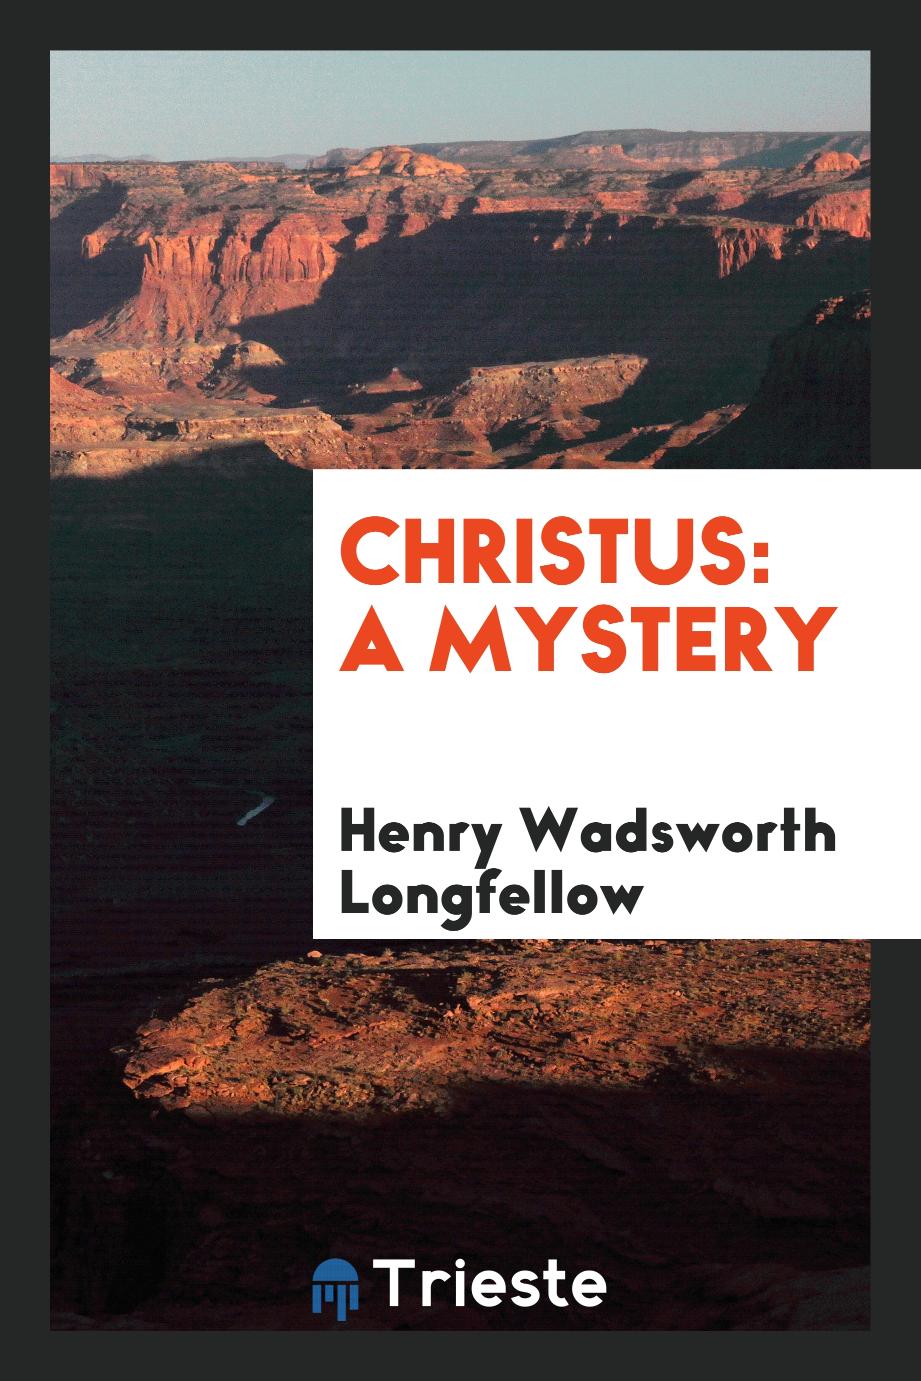 Henry Wadsworth Longfellow - Christus: a mystery